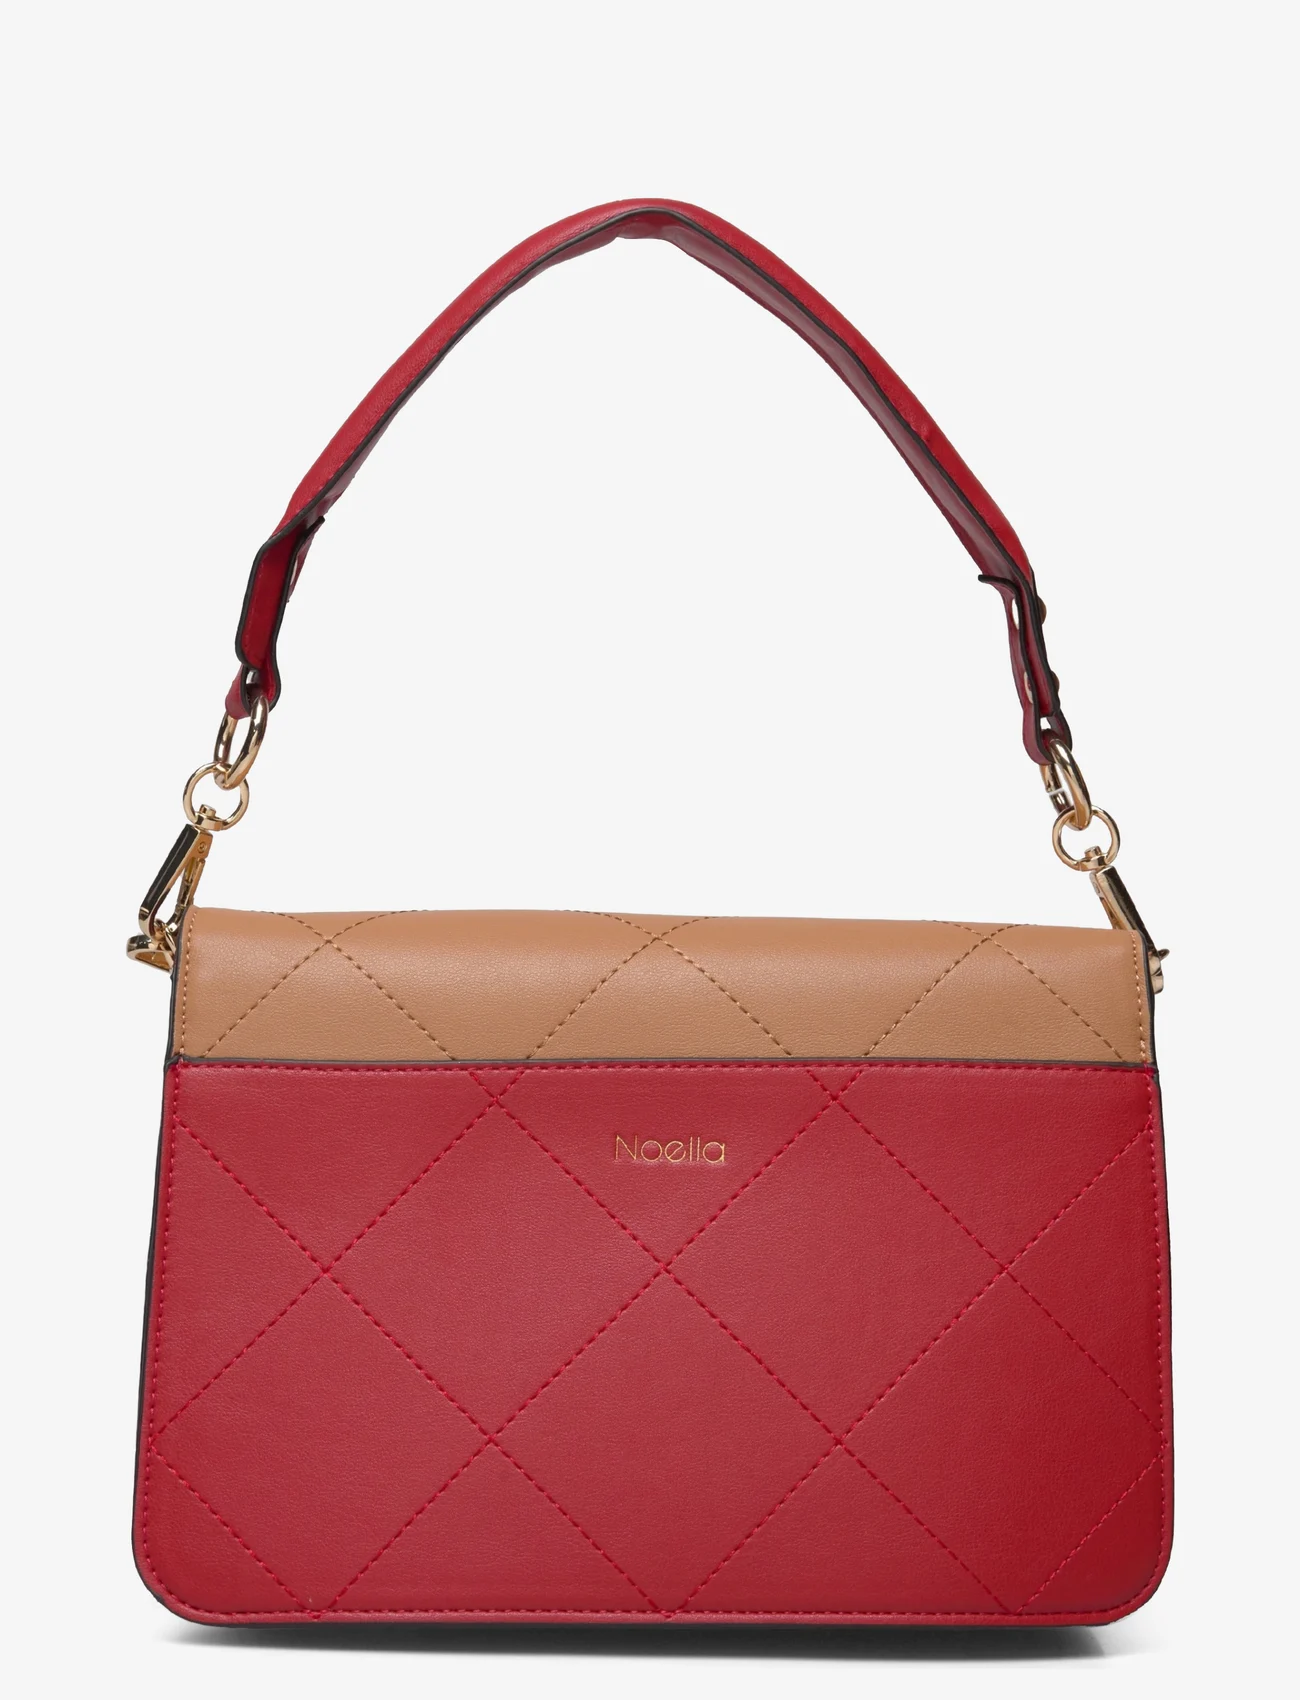 Noella - Blanca Multi Compartment Bag - ballīšu apģērbs par outlet cenām - camel/red/pink - 1